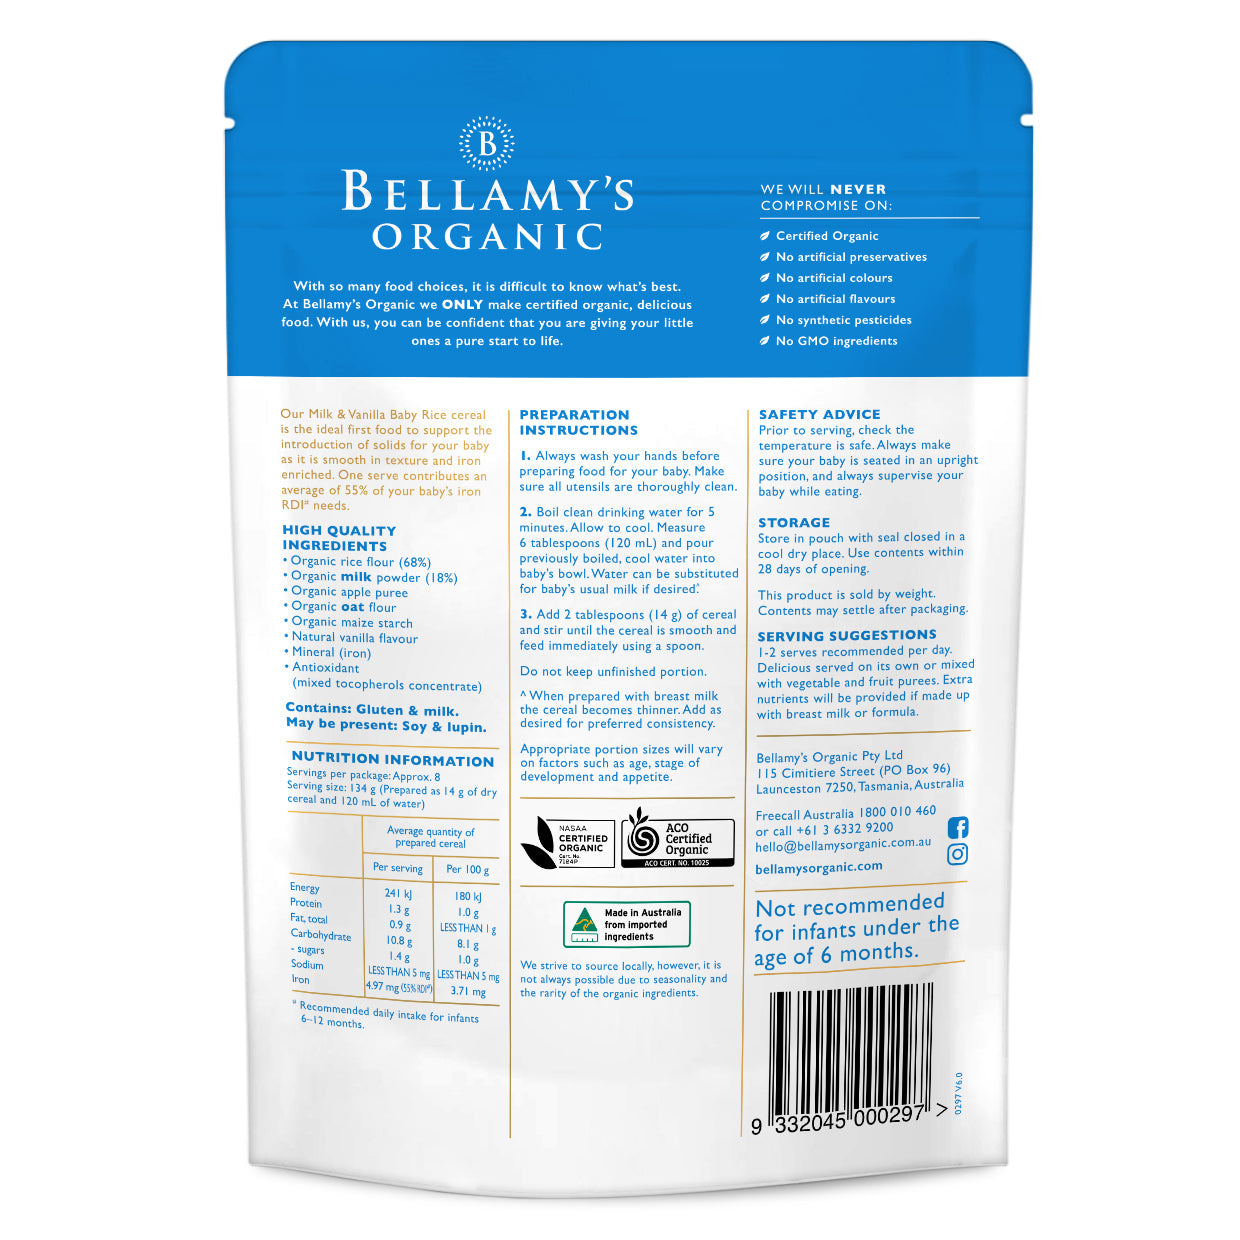 Bellamy's Organic Milk & Vanilla Baby Rice Cereal 6+ Months 125g